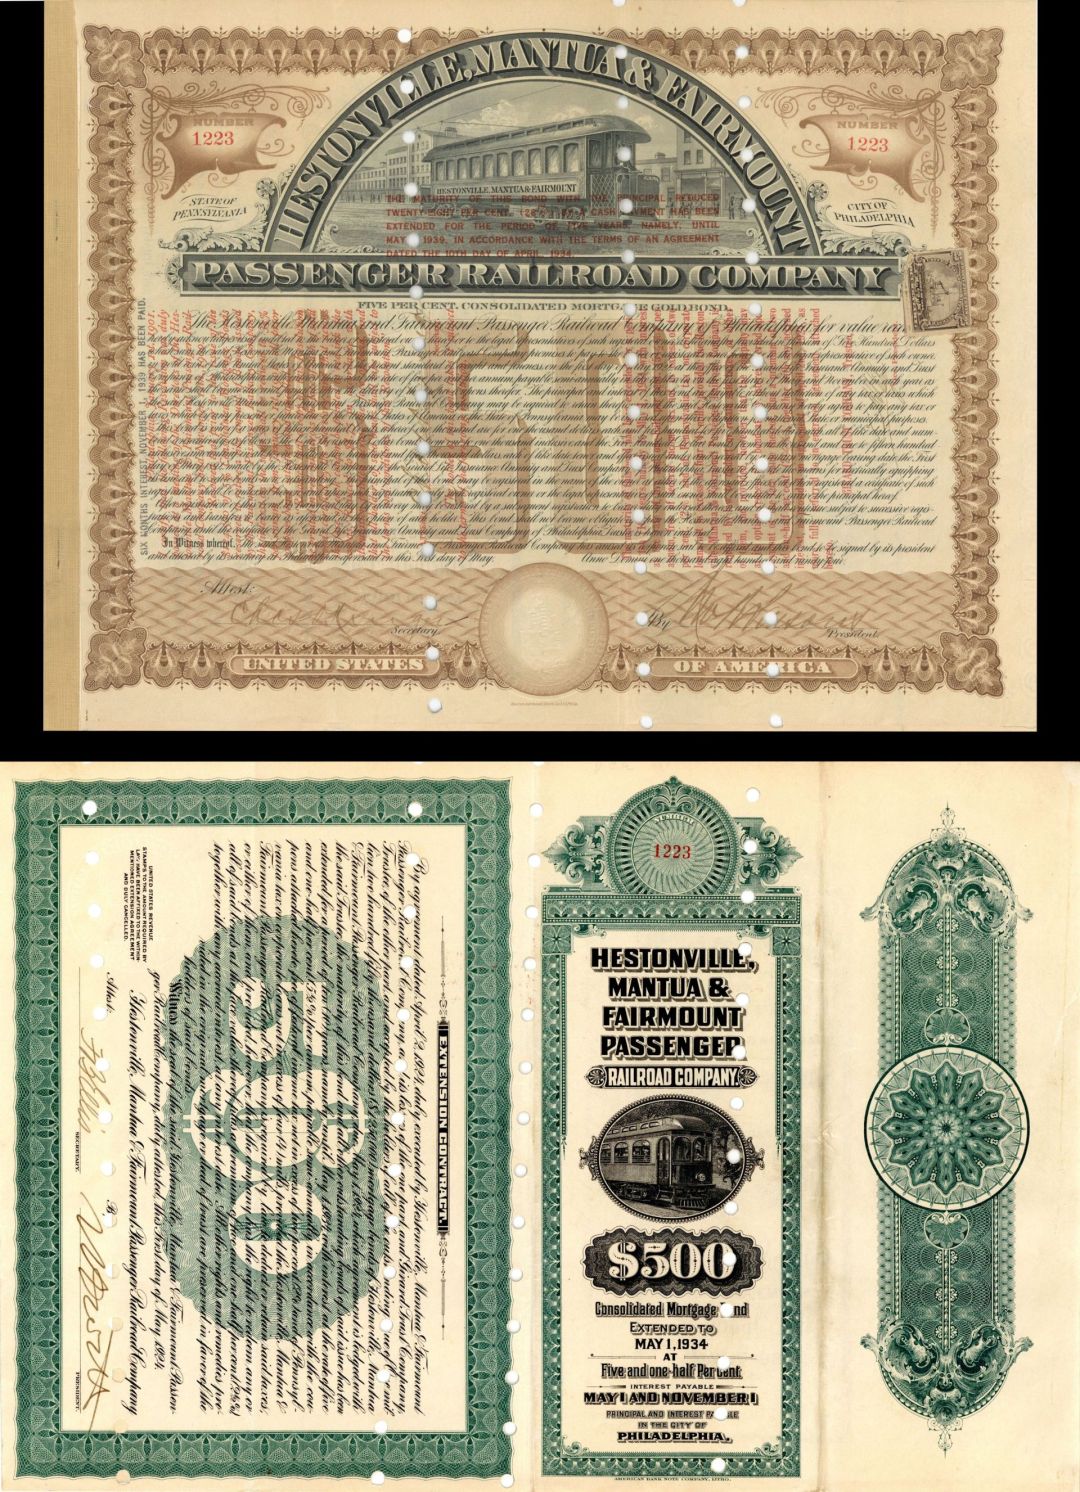 Hestonville, Mantua and Fairmount Passenger Railroad Co. - 1894 $500 Railroad Bond